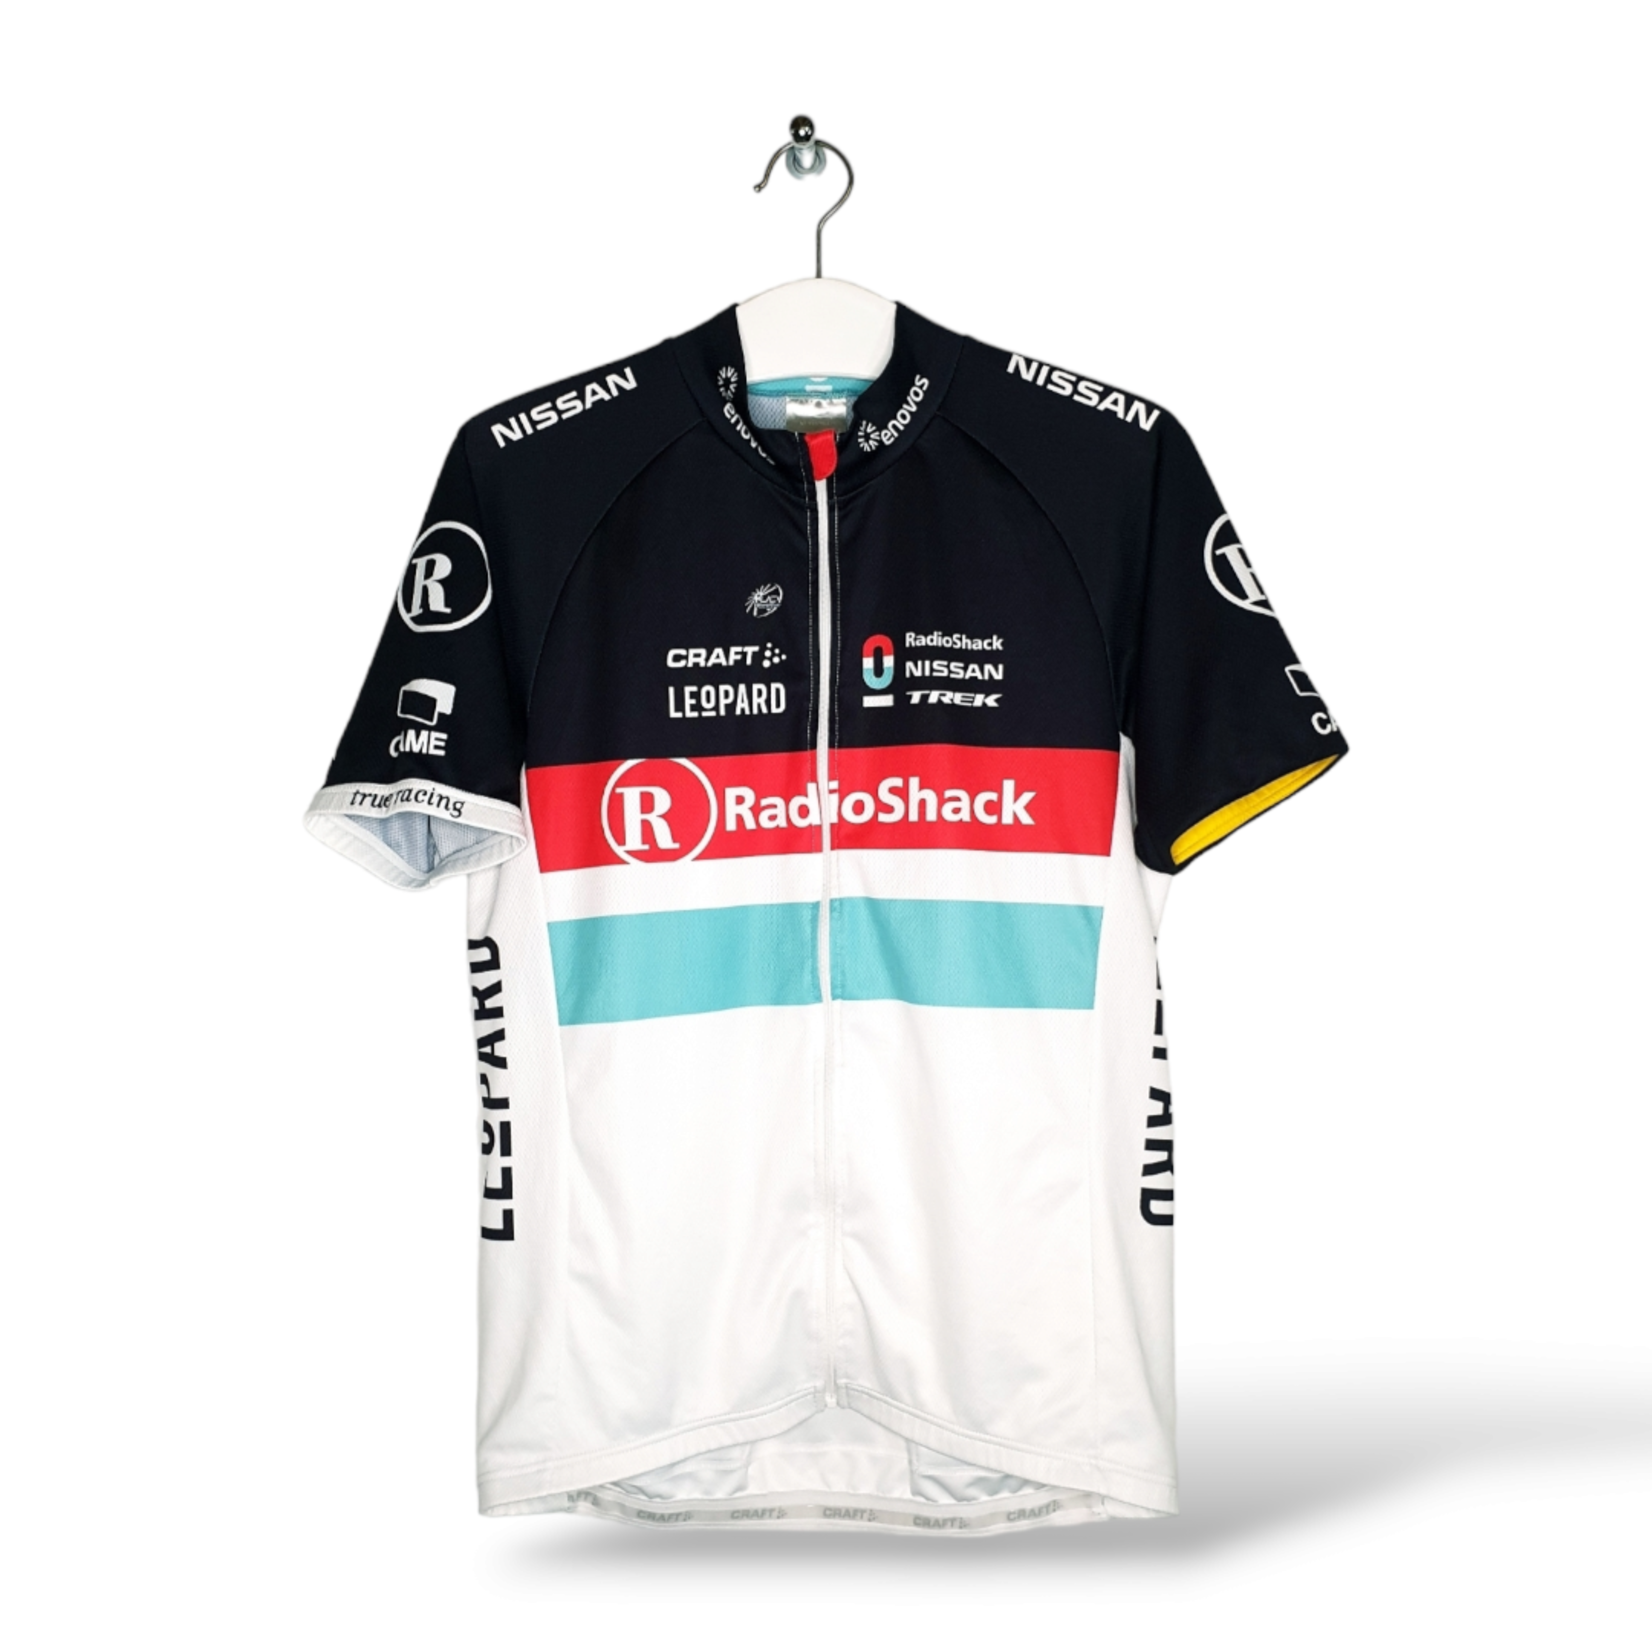 Craft vintage cycling shirt RadioShack-Nissan-Trek 2012 - We Love Sports  Shirts